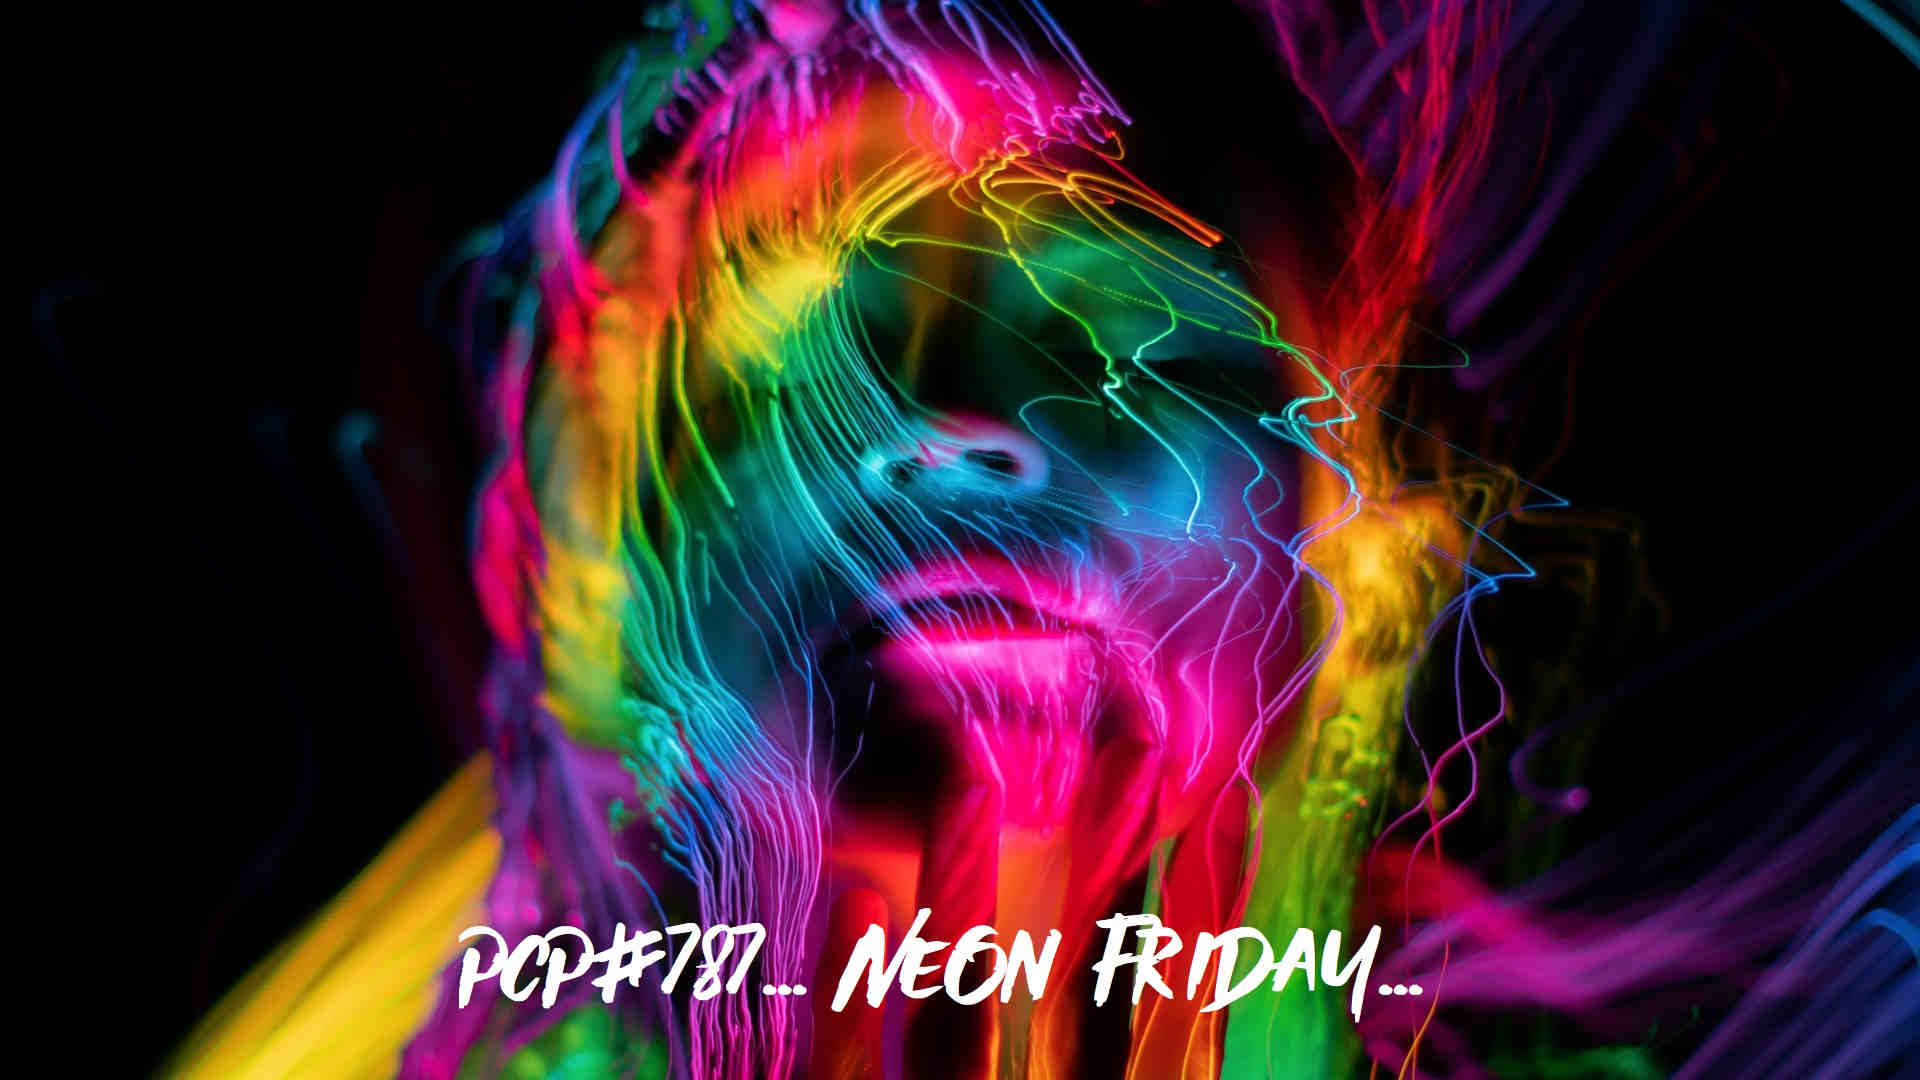 PCP#787... Neon Friday...